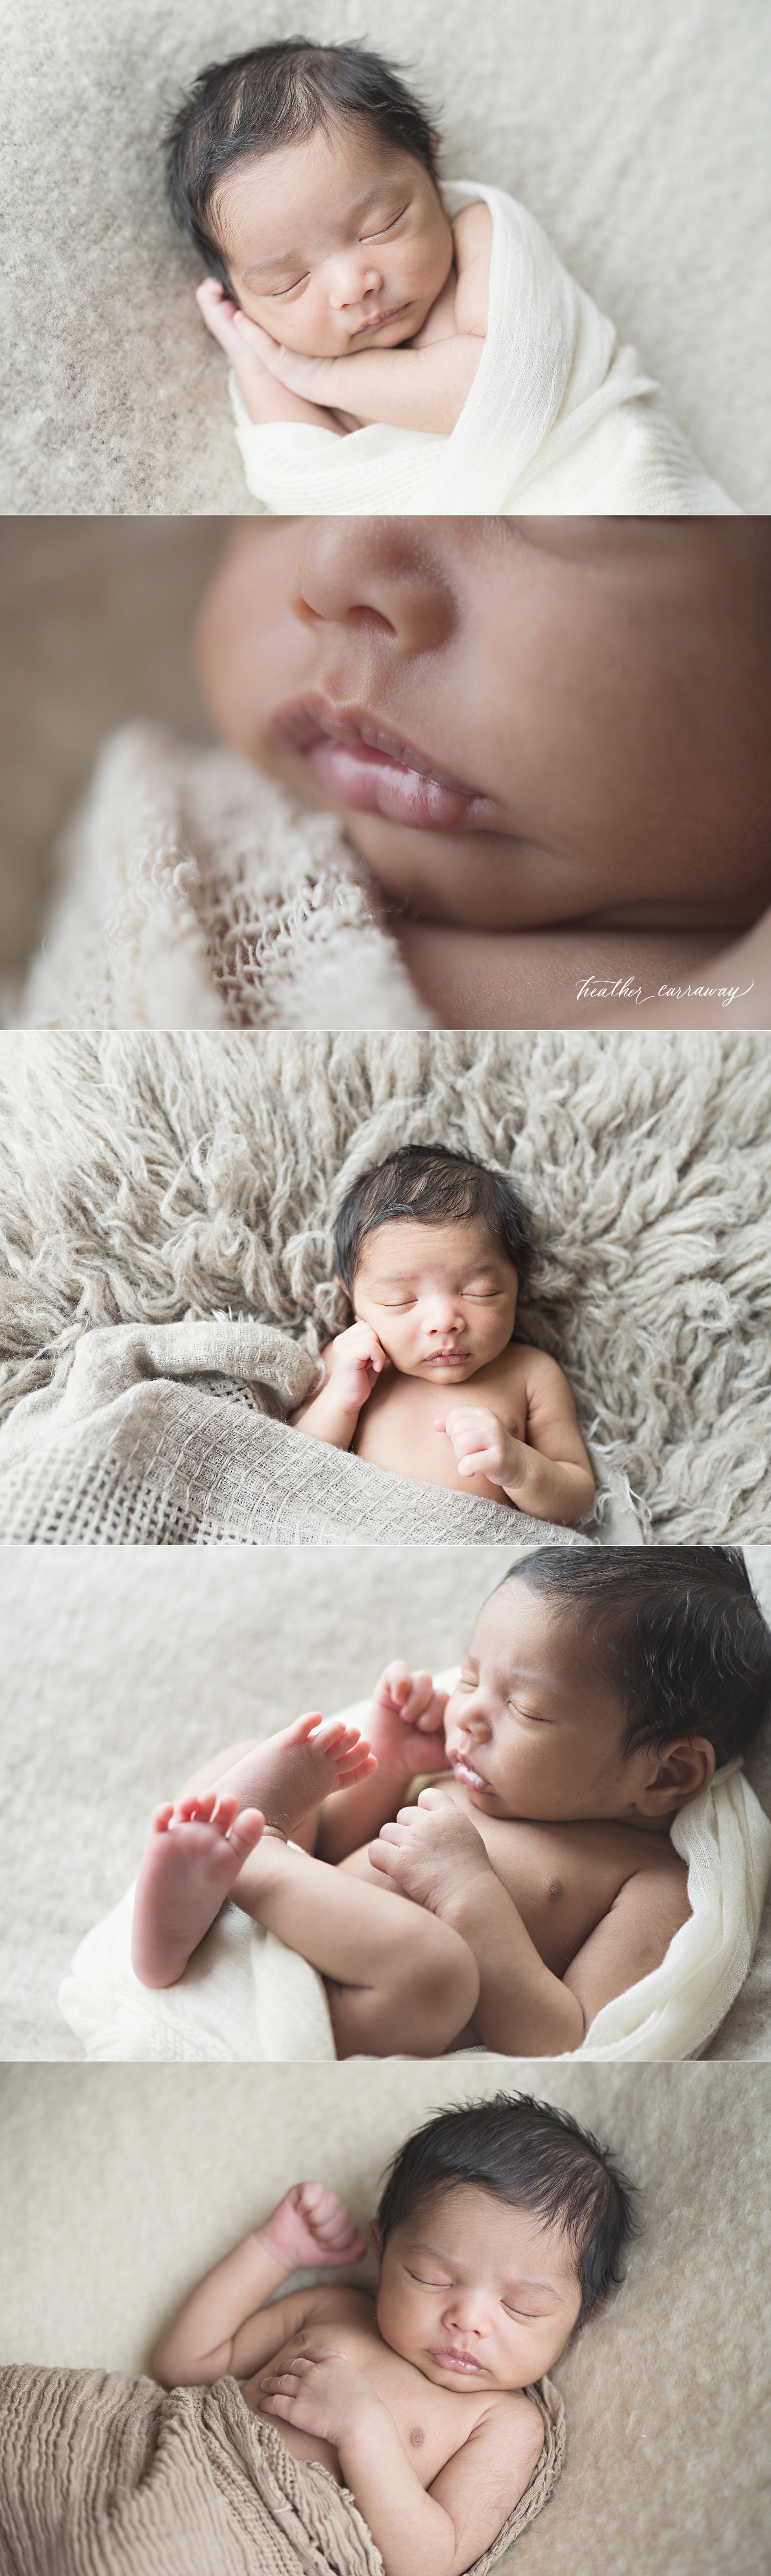 atlanta newborn baby photographer, natural, organic